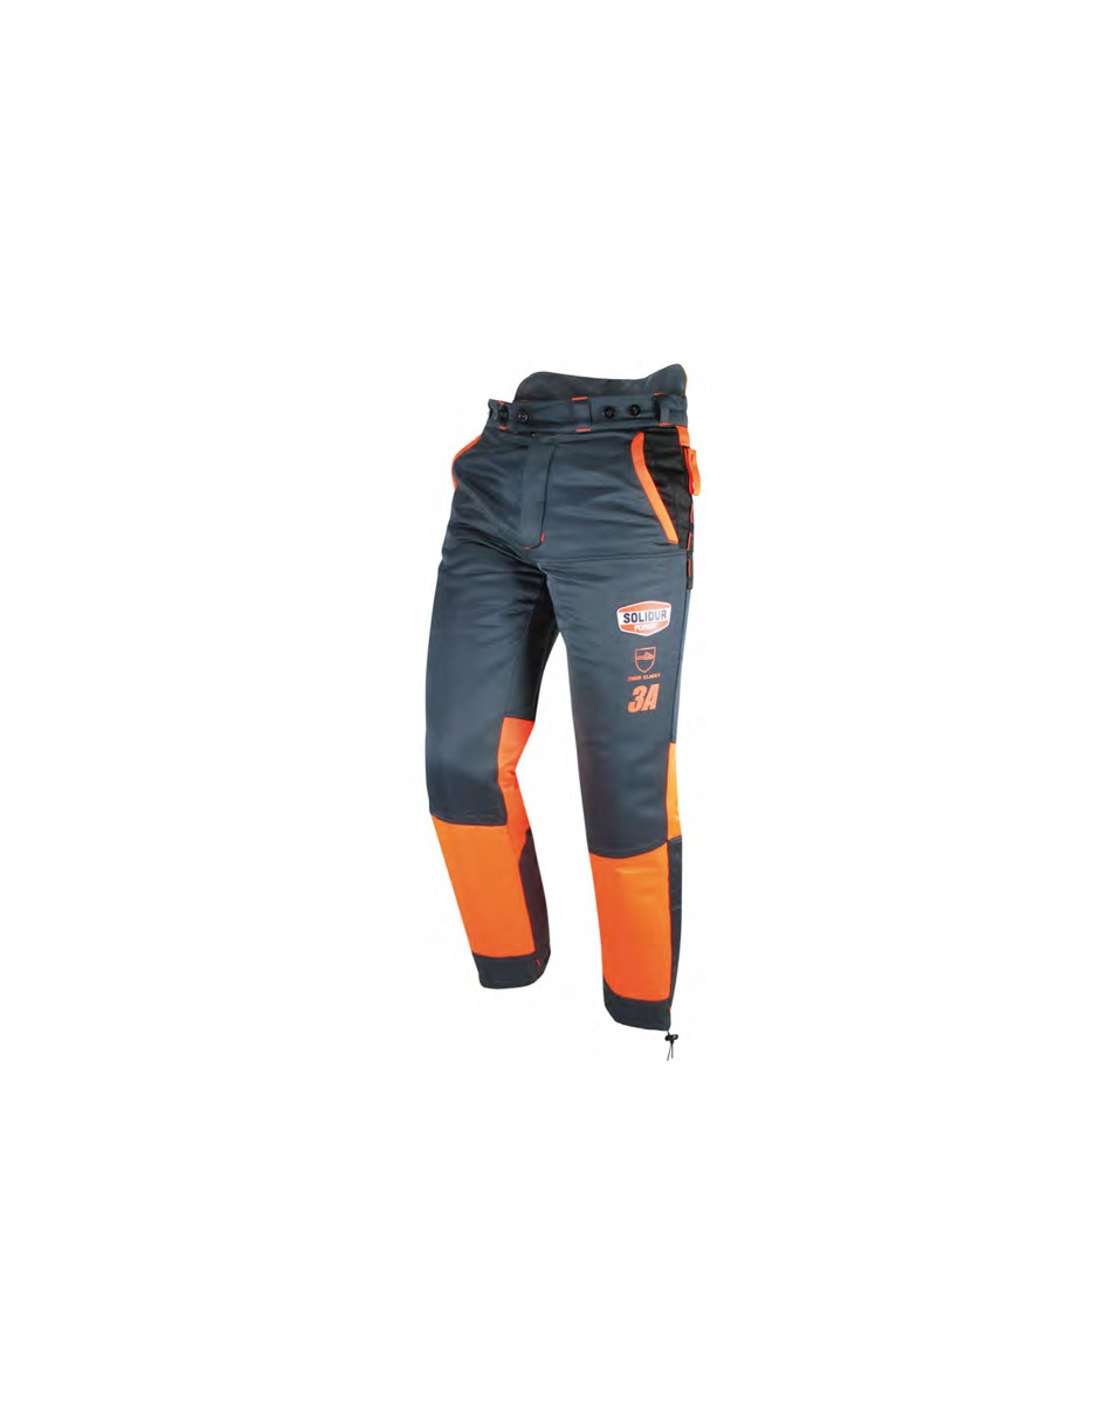 PSS X-treme air 5x5 corte protección pantalones motosierras pantalones forsthose bosque pantalones de trabajo 